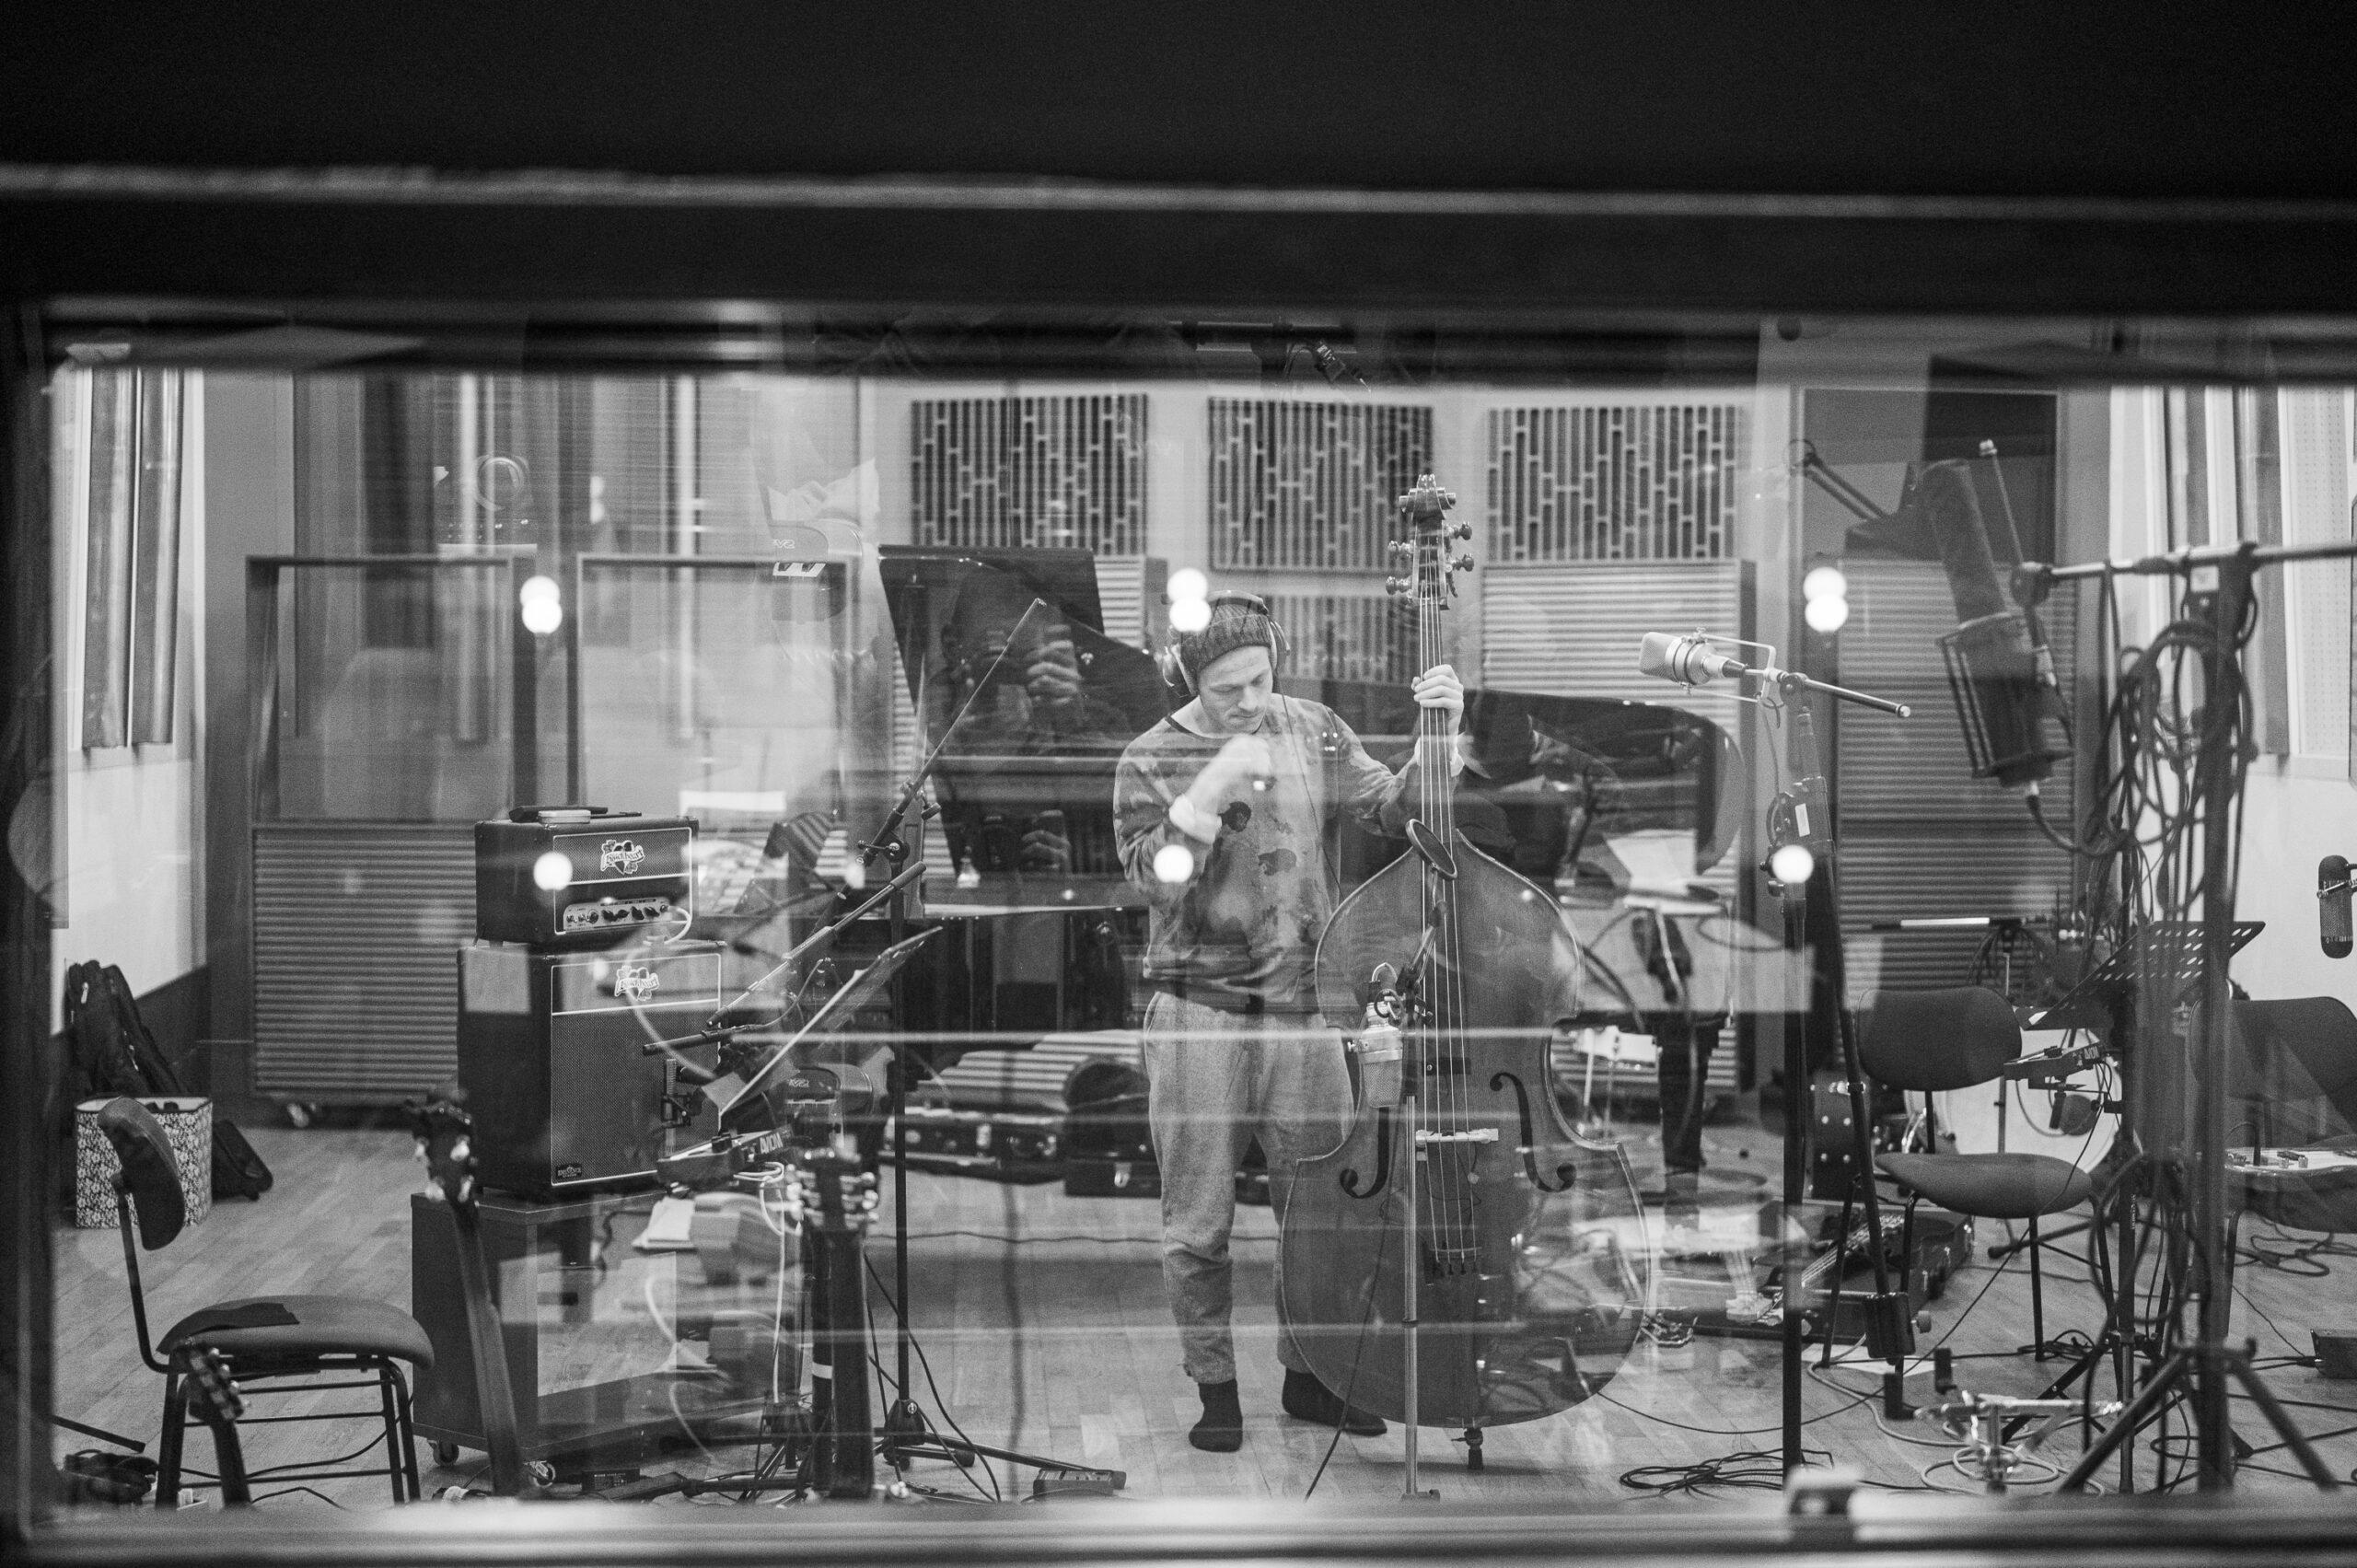 Georg standing in a studio